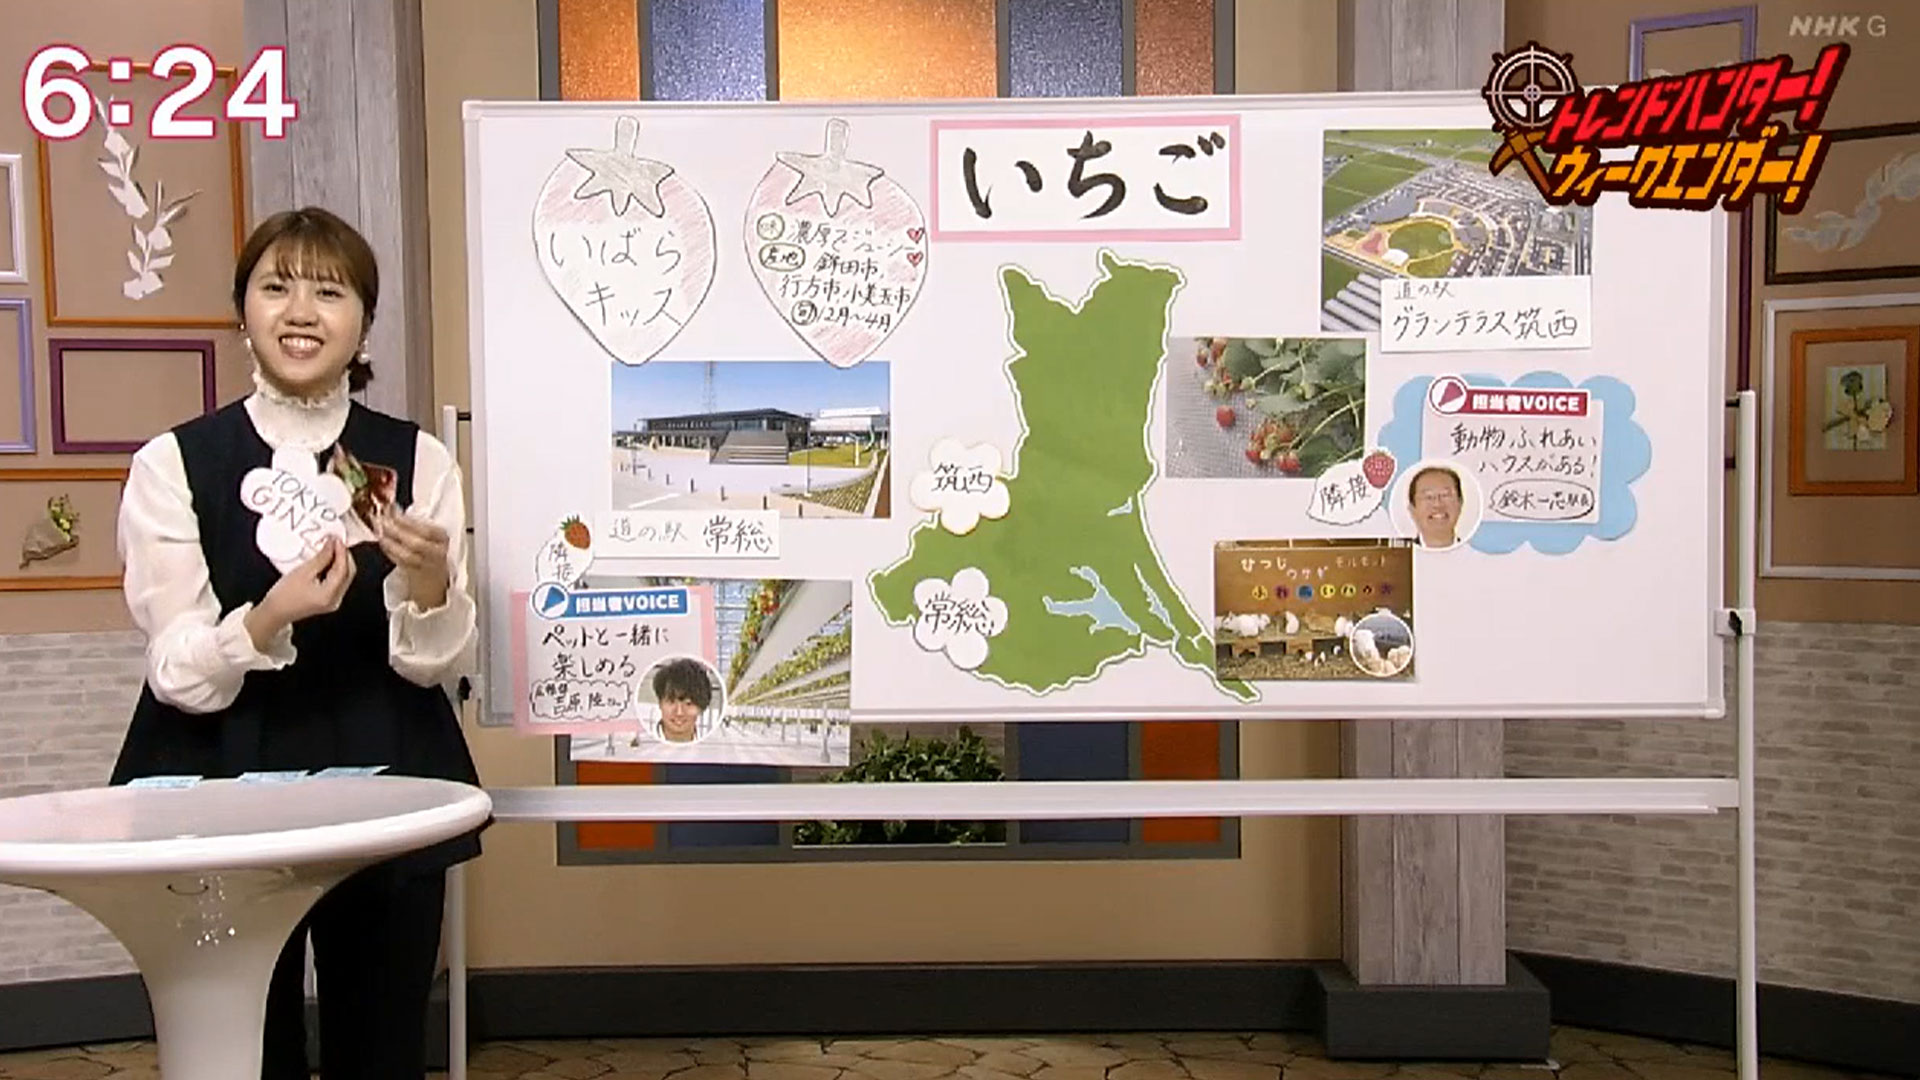 NHK「いば6」で紹介されました！